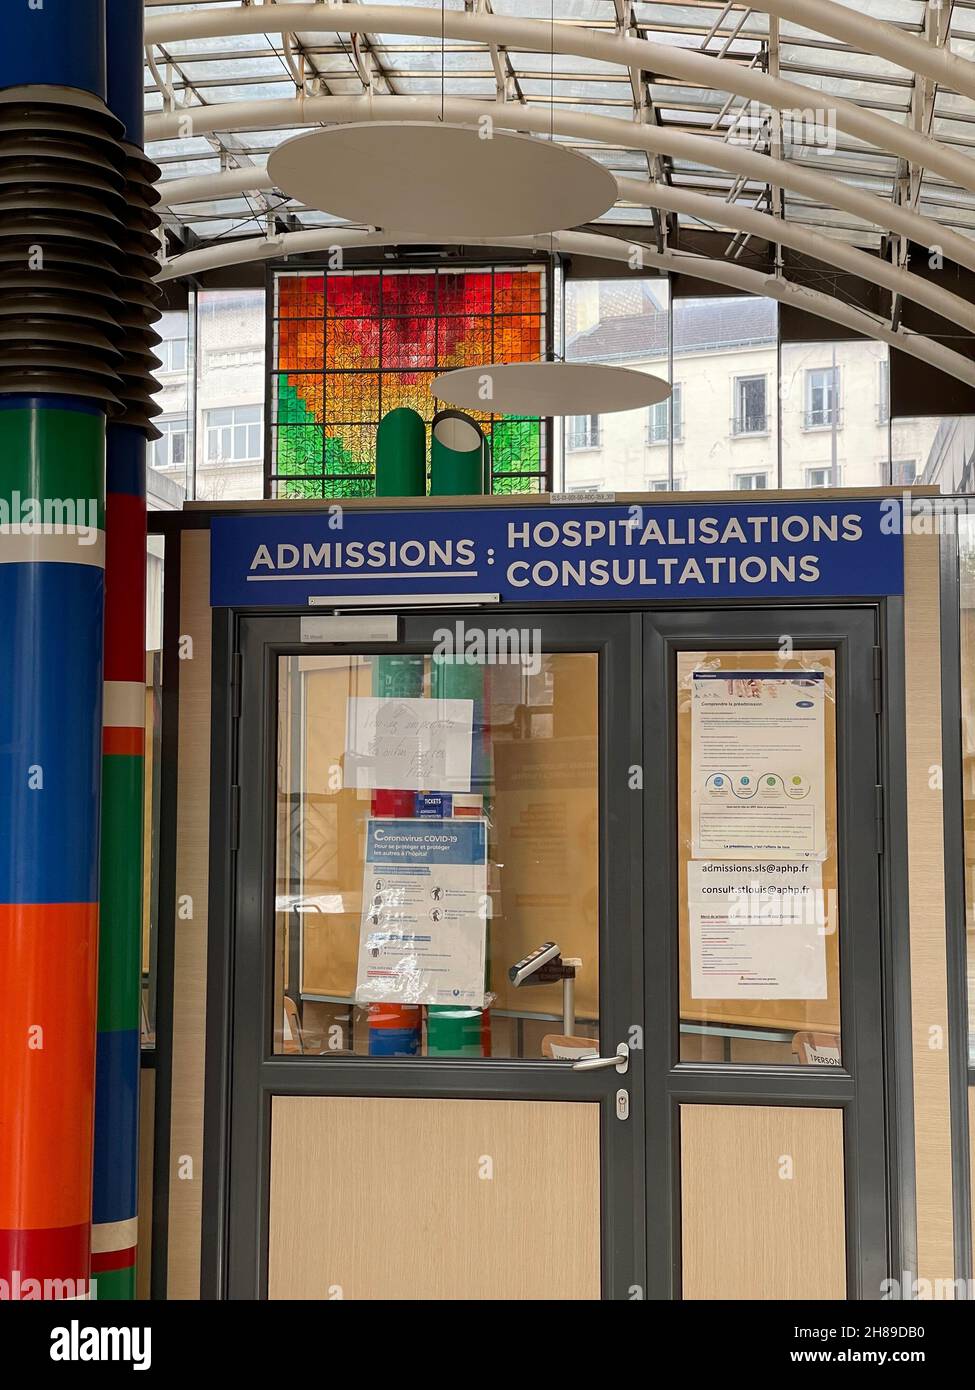 Saint-louis hospital in paris Stock Photo